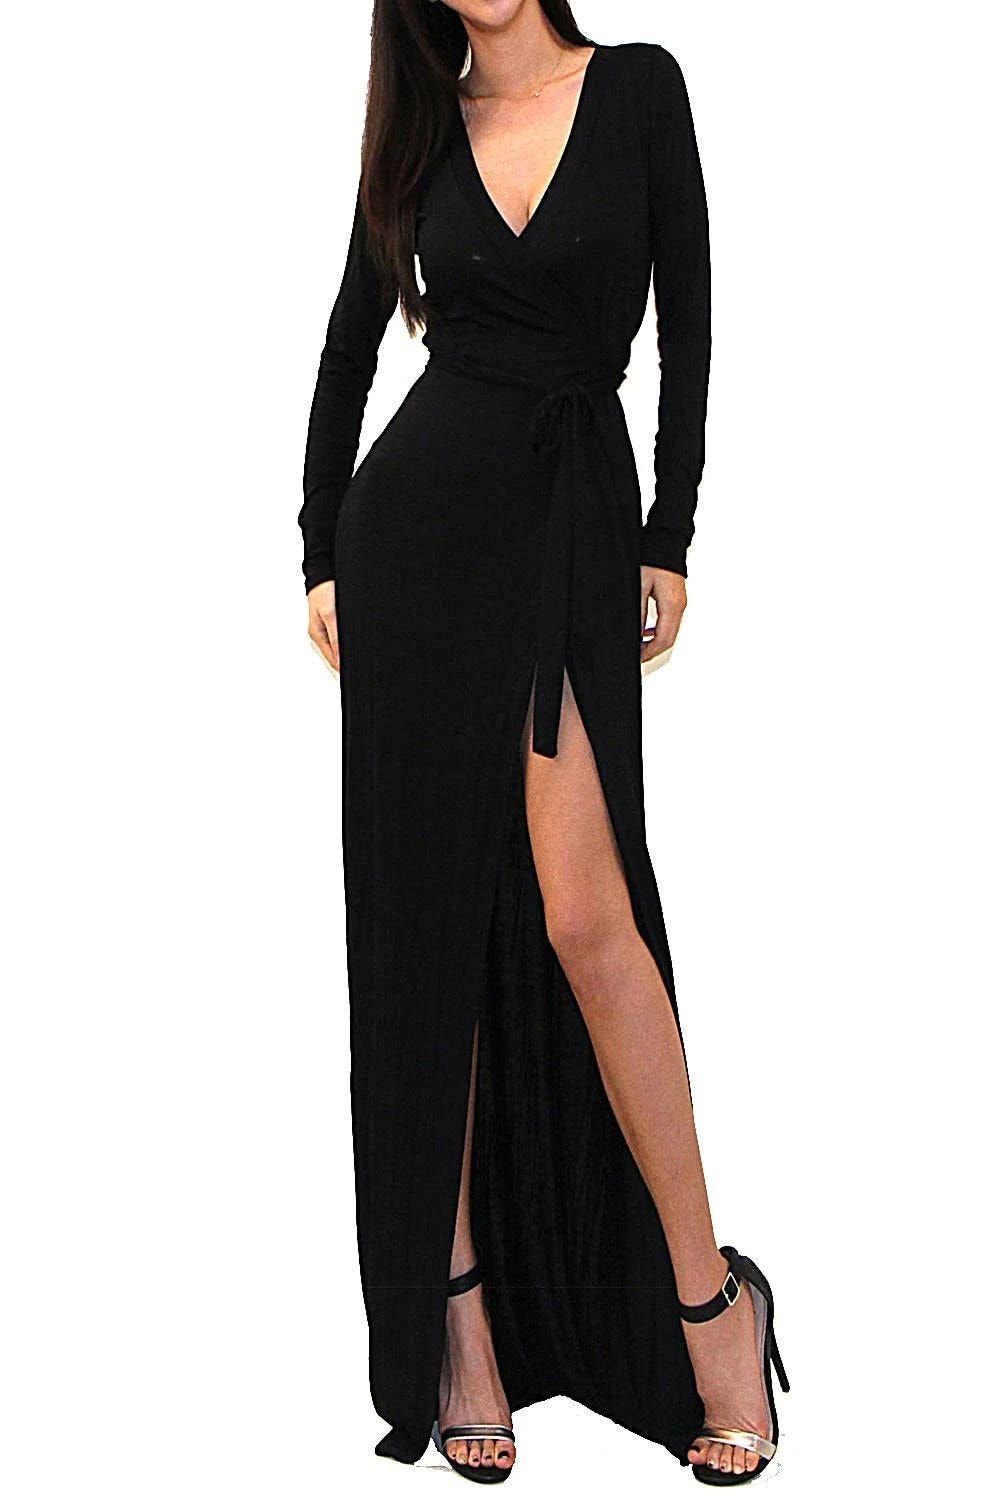 Sleek Black Maxi Dress for Women - Stylish Cocktail Party Attire | Image